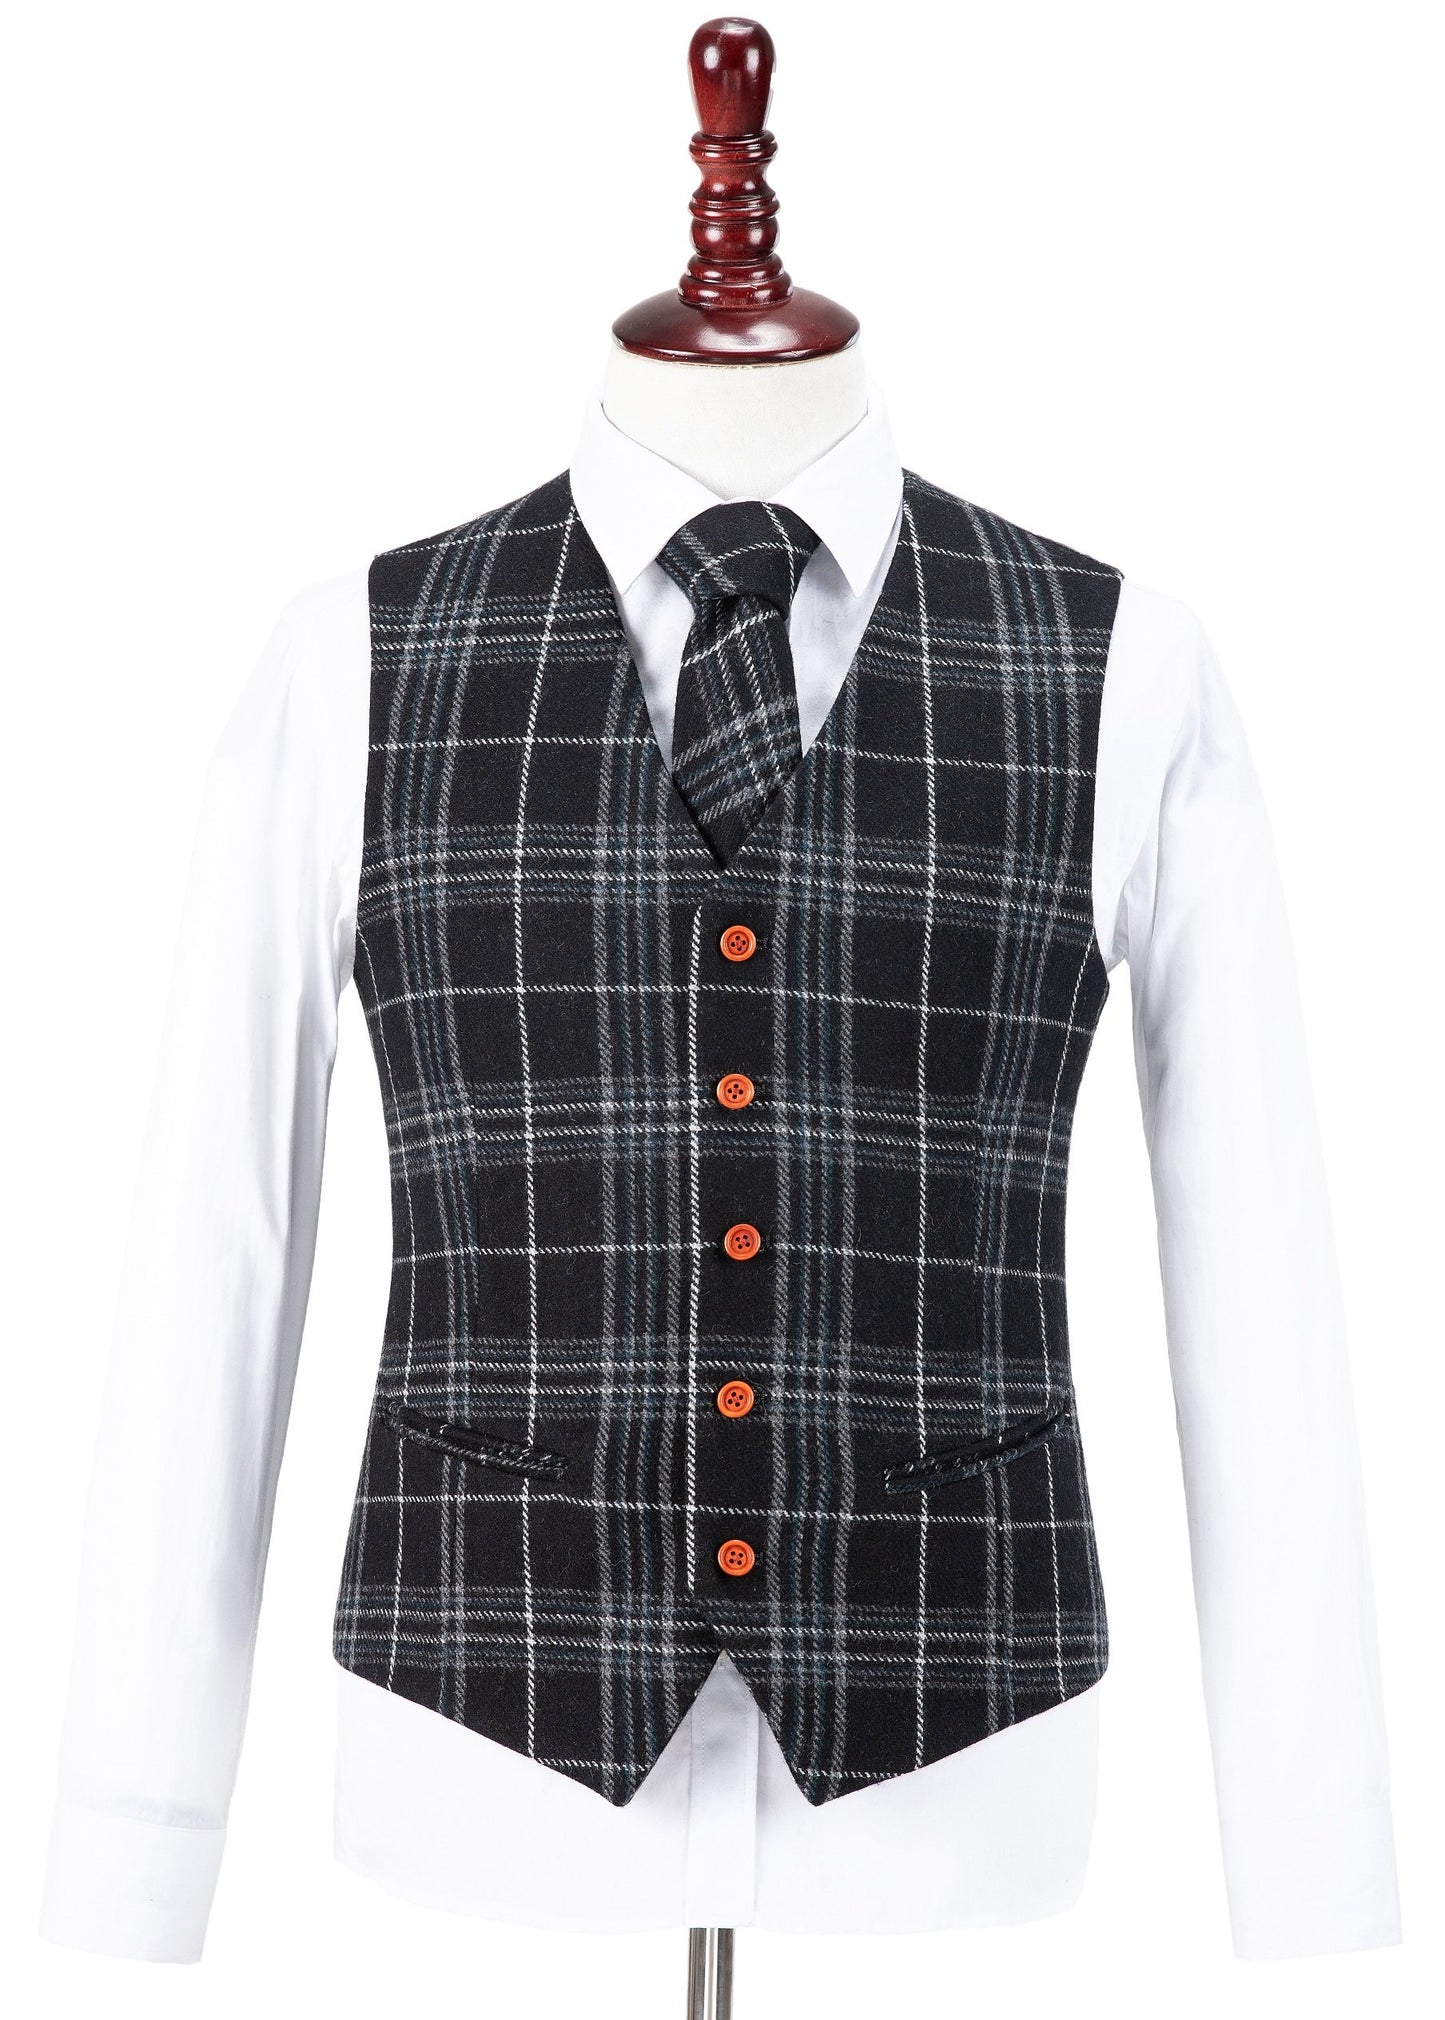 Black Plaid Overcheck Tweed Suit